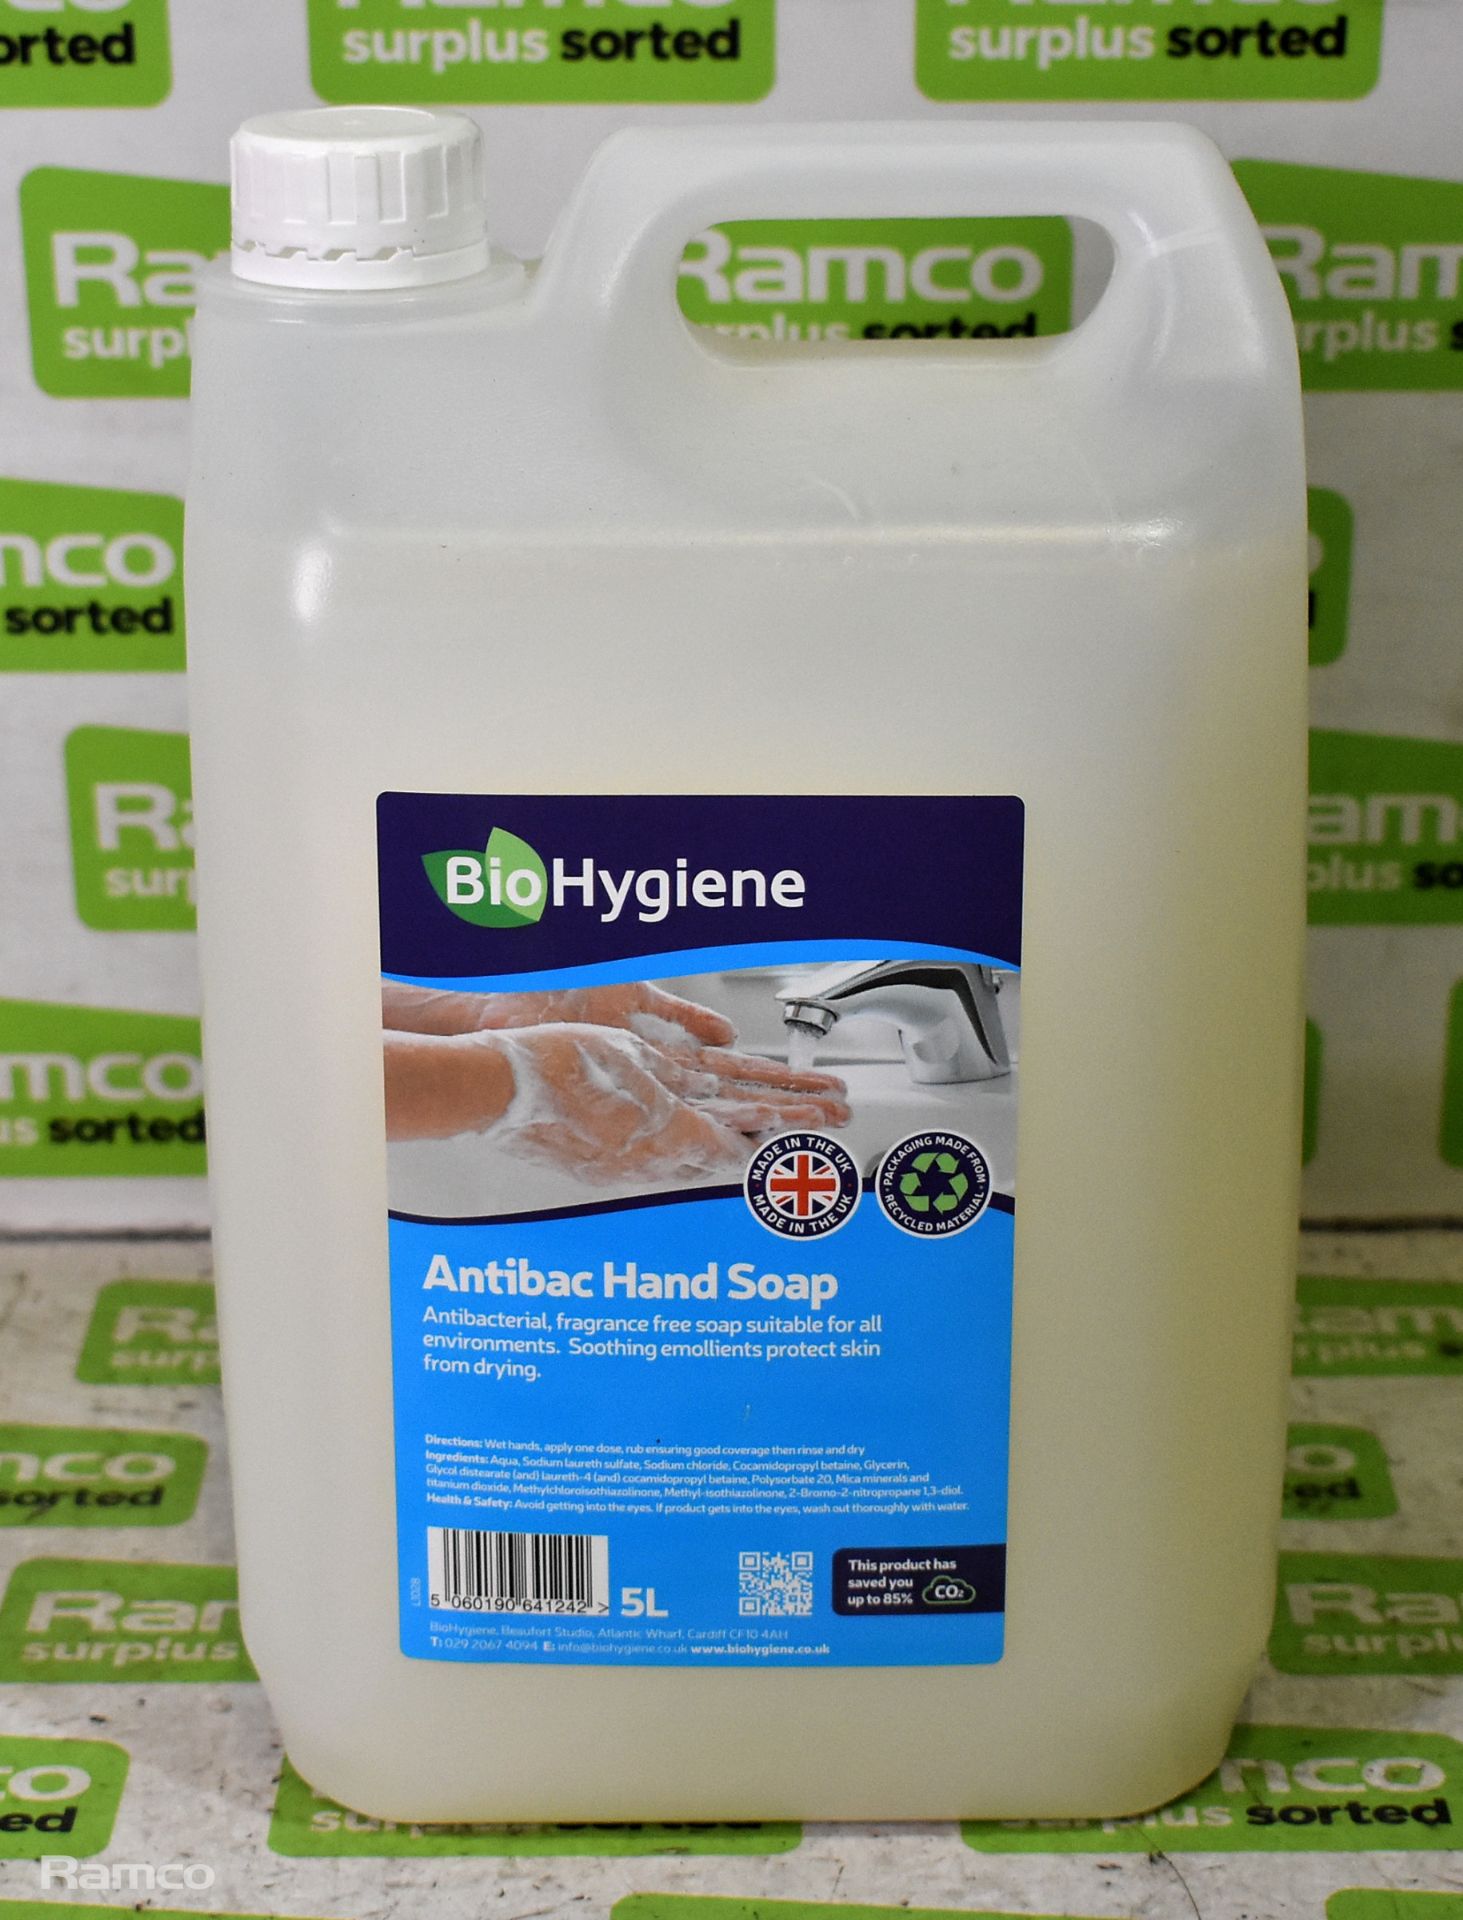 2x boxes of 2 bottles of Bio Hygiene 5L anti bac hand soap